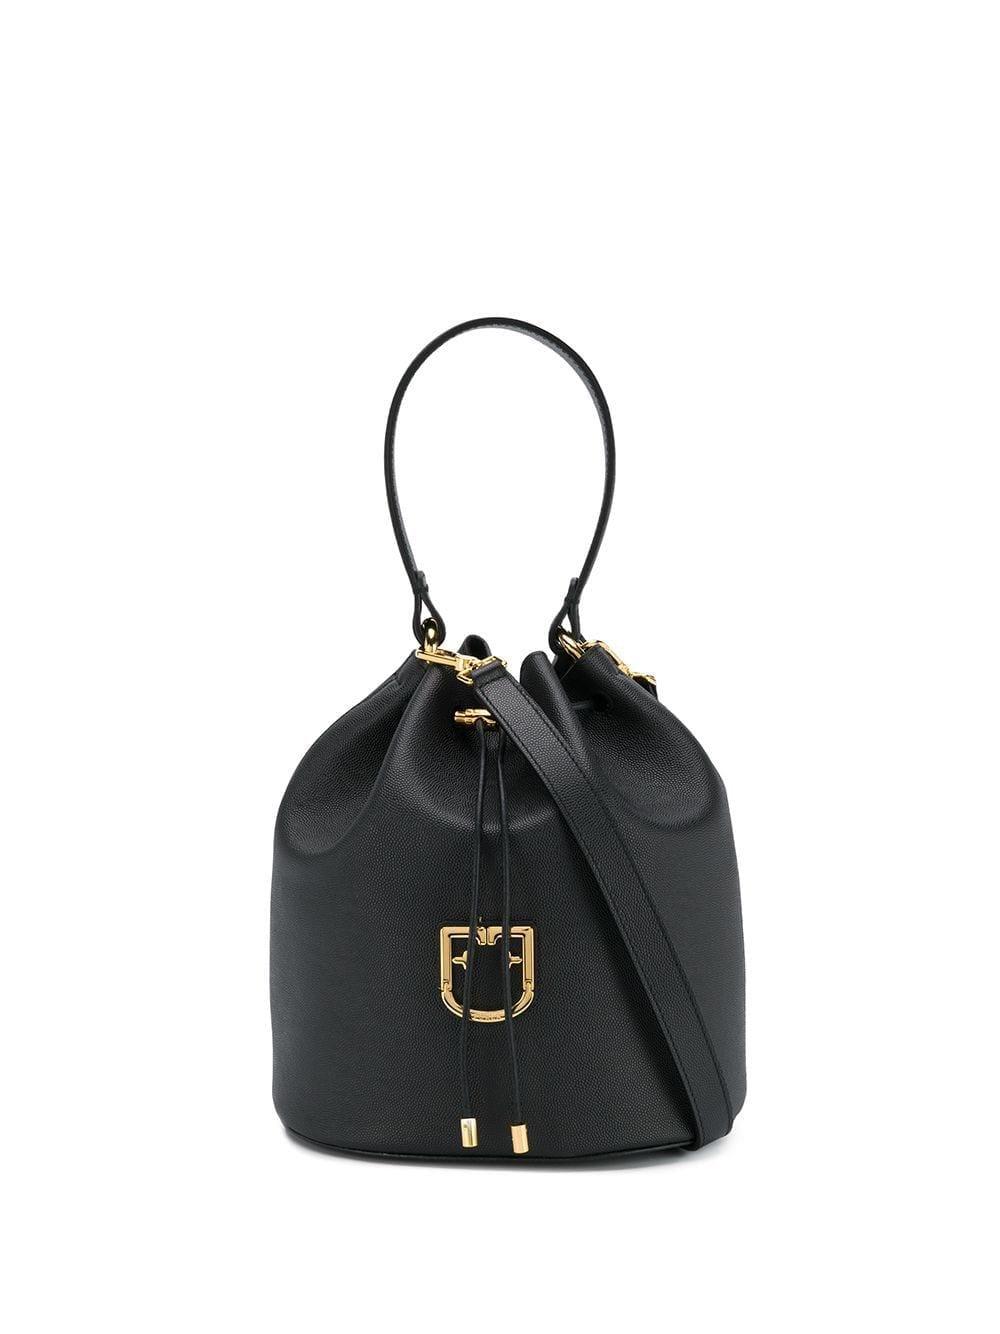 Furla Leather Corona Bucket Bag in Black - Save 47% - Lyst